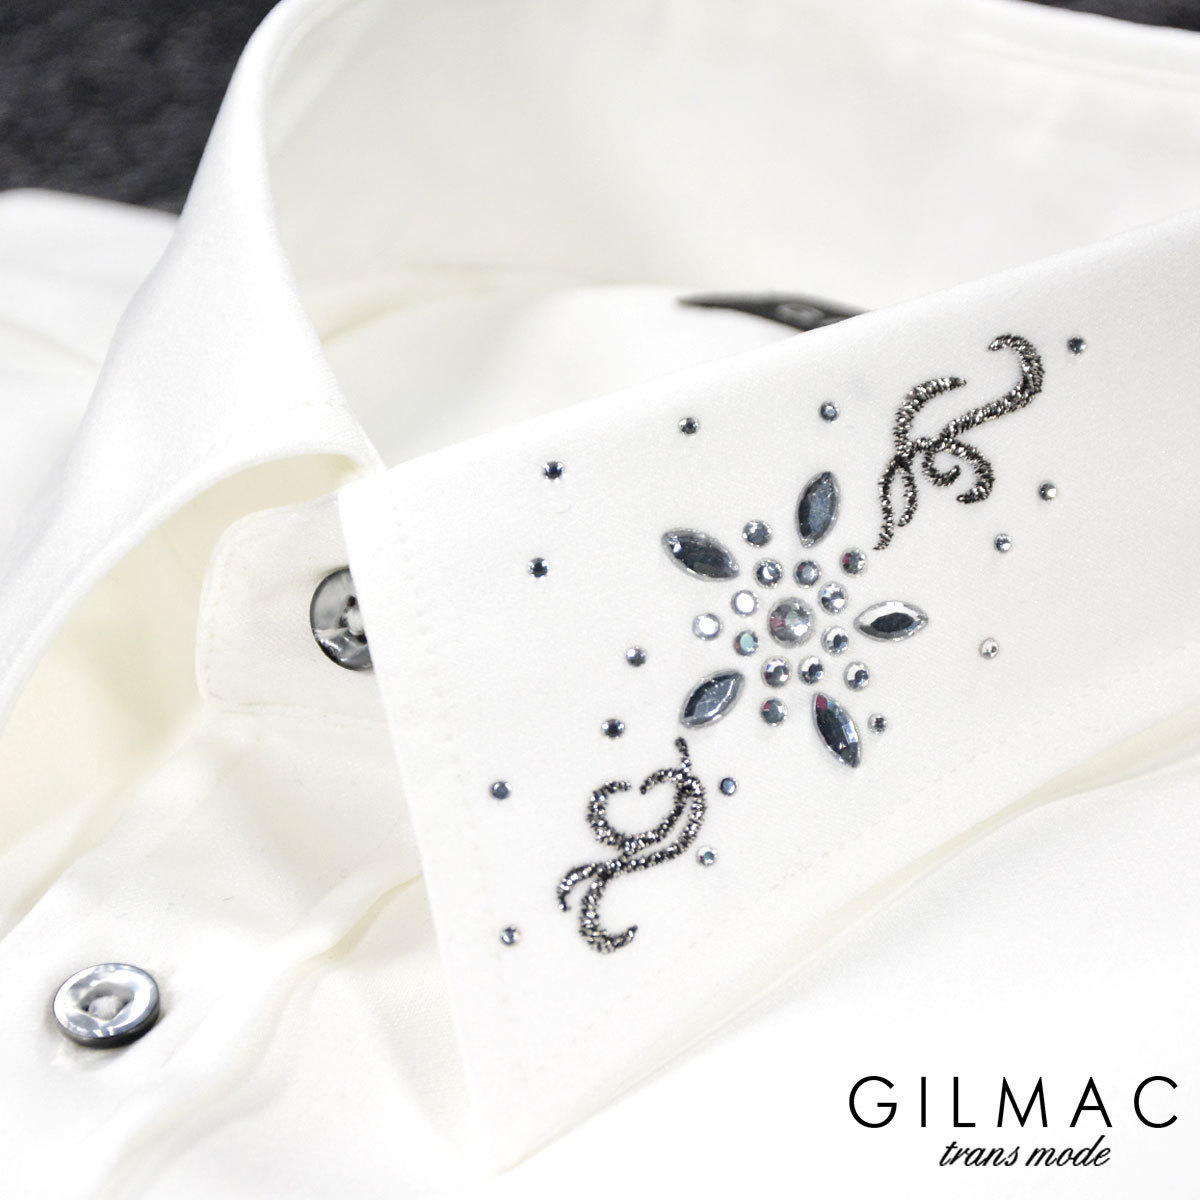 36740-1 GILMAC 無地 レギュラーカラー 襟 花 ラインストーン 長袖サテンドレスシャツ メンズ(ホワイト白) S 結婚式 パーティー